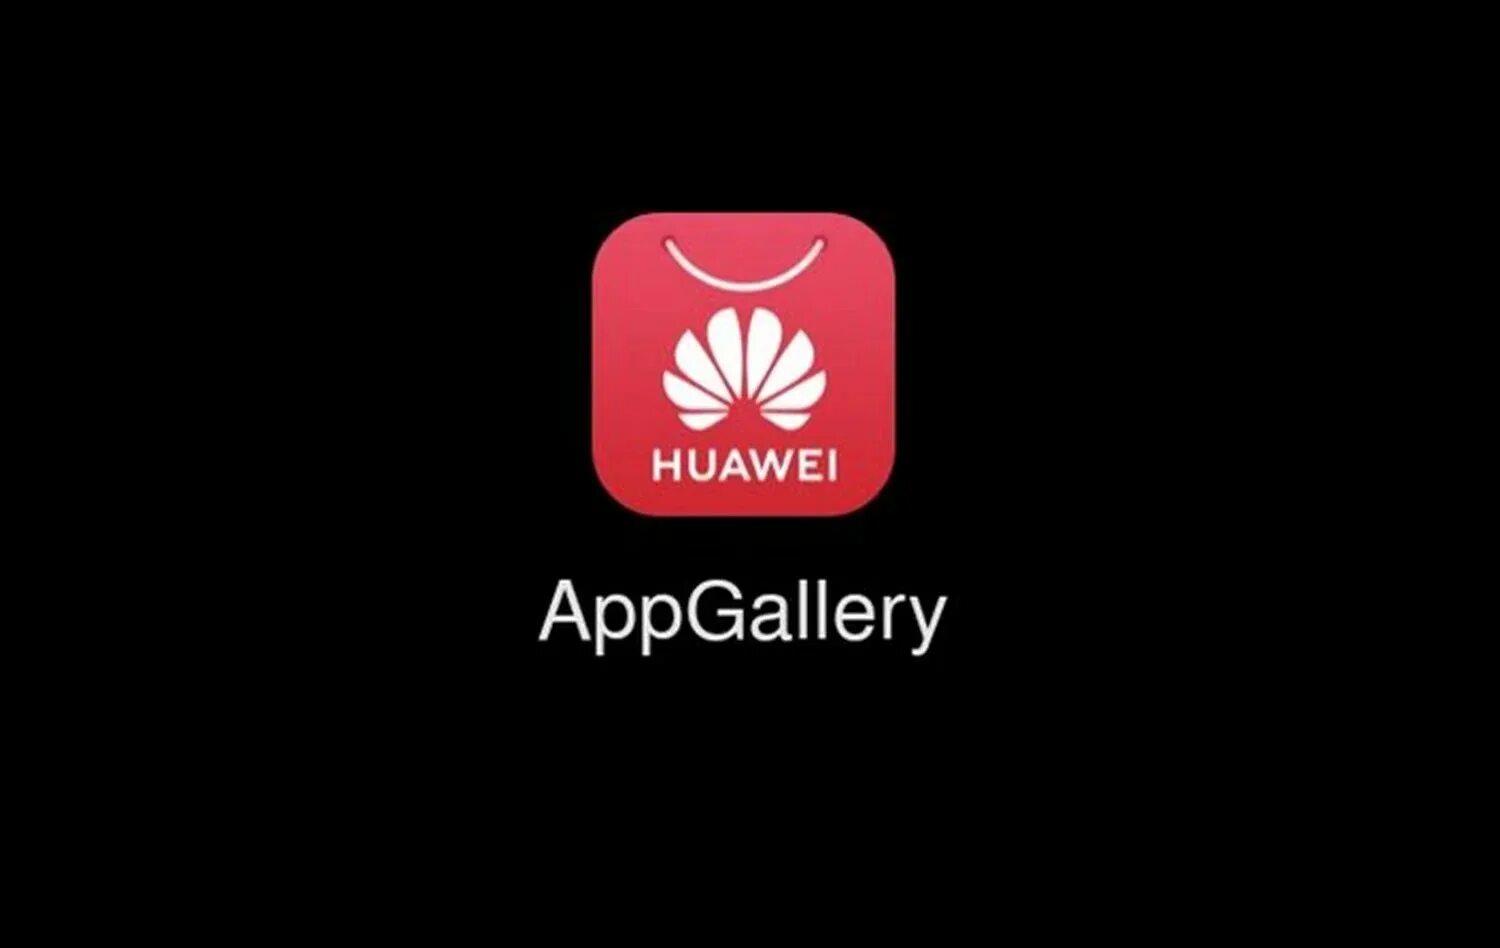 Huawei app Gallery значок. Приложения Хуавей APPGALLERY. Апп галерея Хуавей. Huawei магазин приложений. Хуавей маркет игры